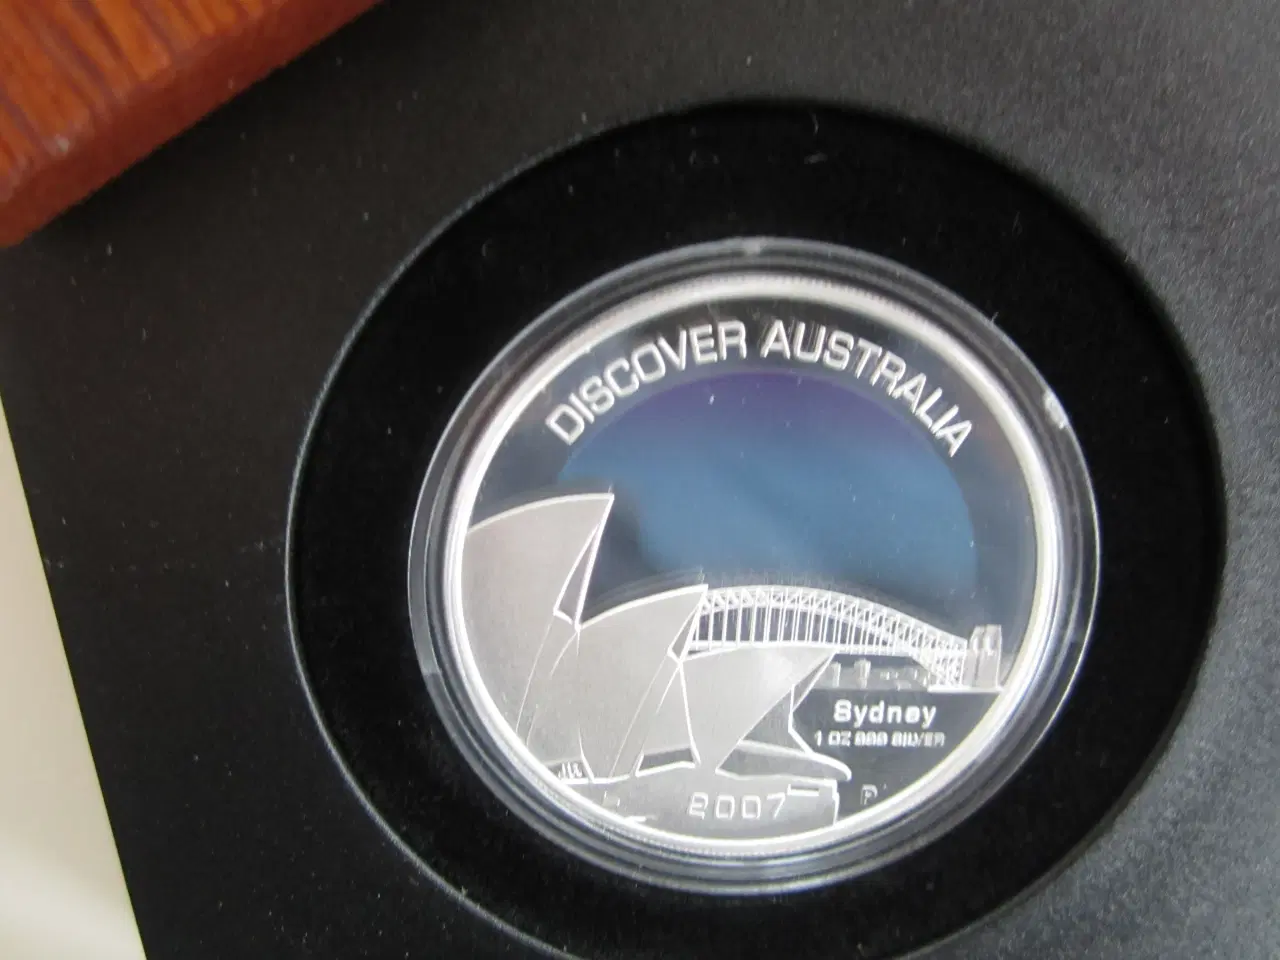 Billede 8 - Discover Australia "Sydney" 2007 sølvmønt.